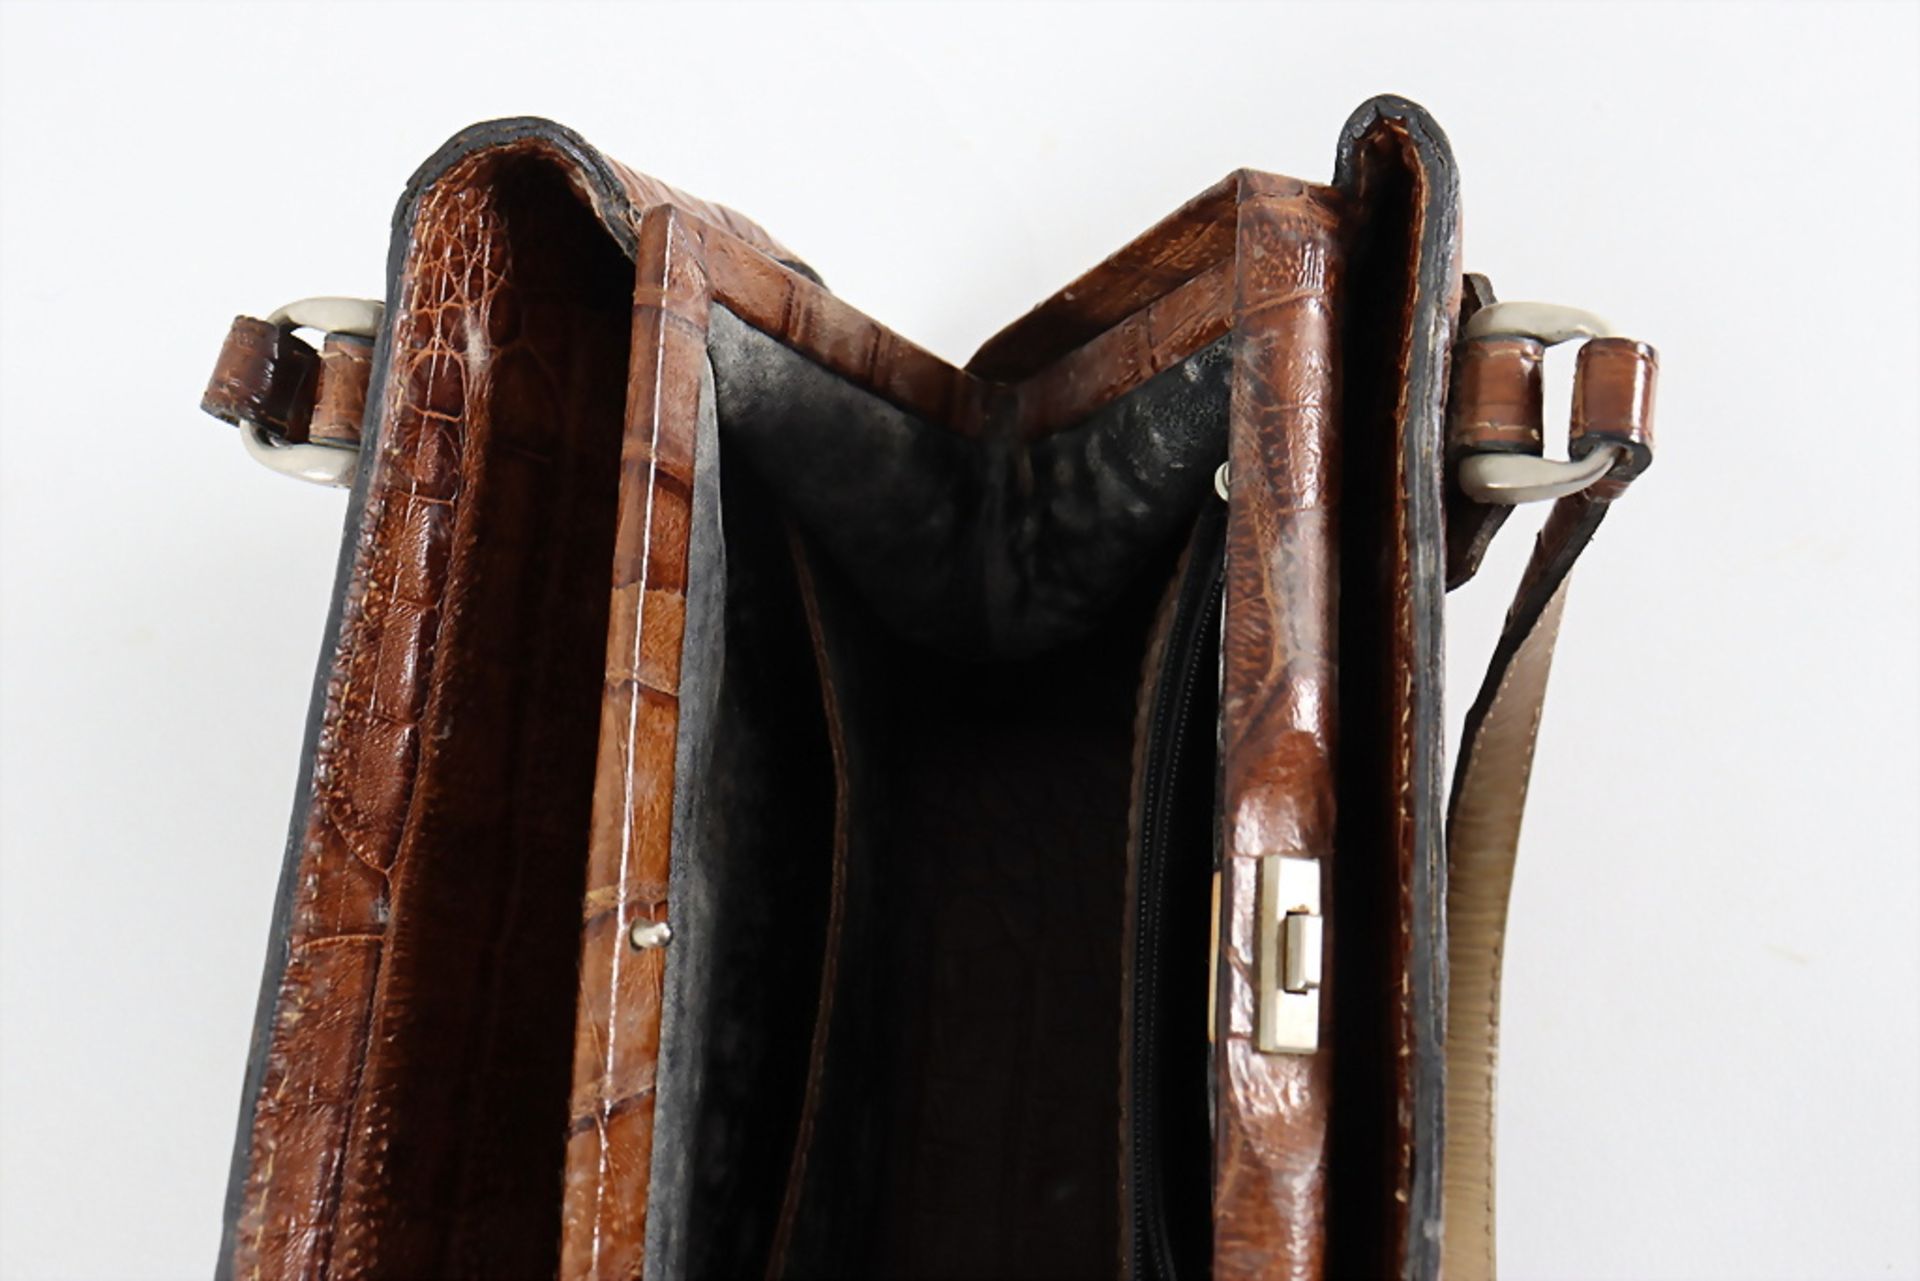 Damenhandtasche / A ladies leather handbag, um 1950 - Image 6 of 6